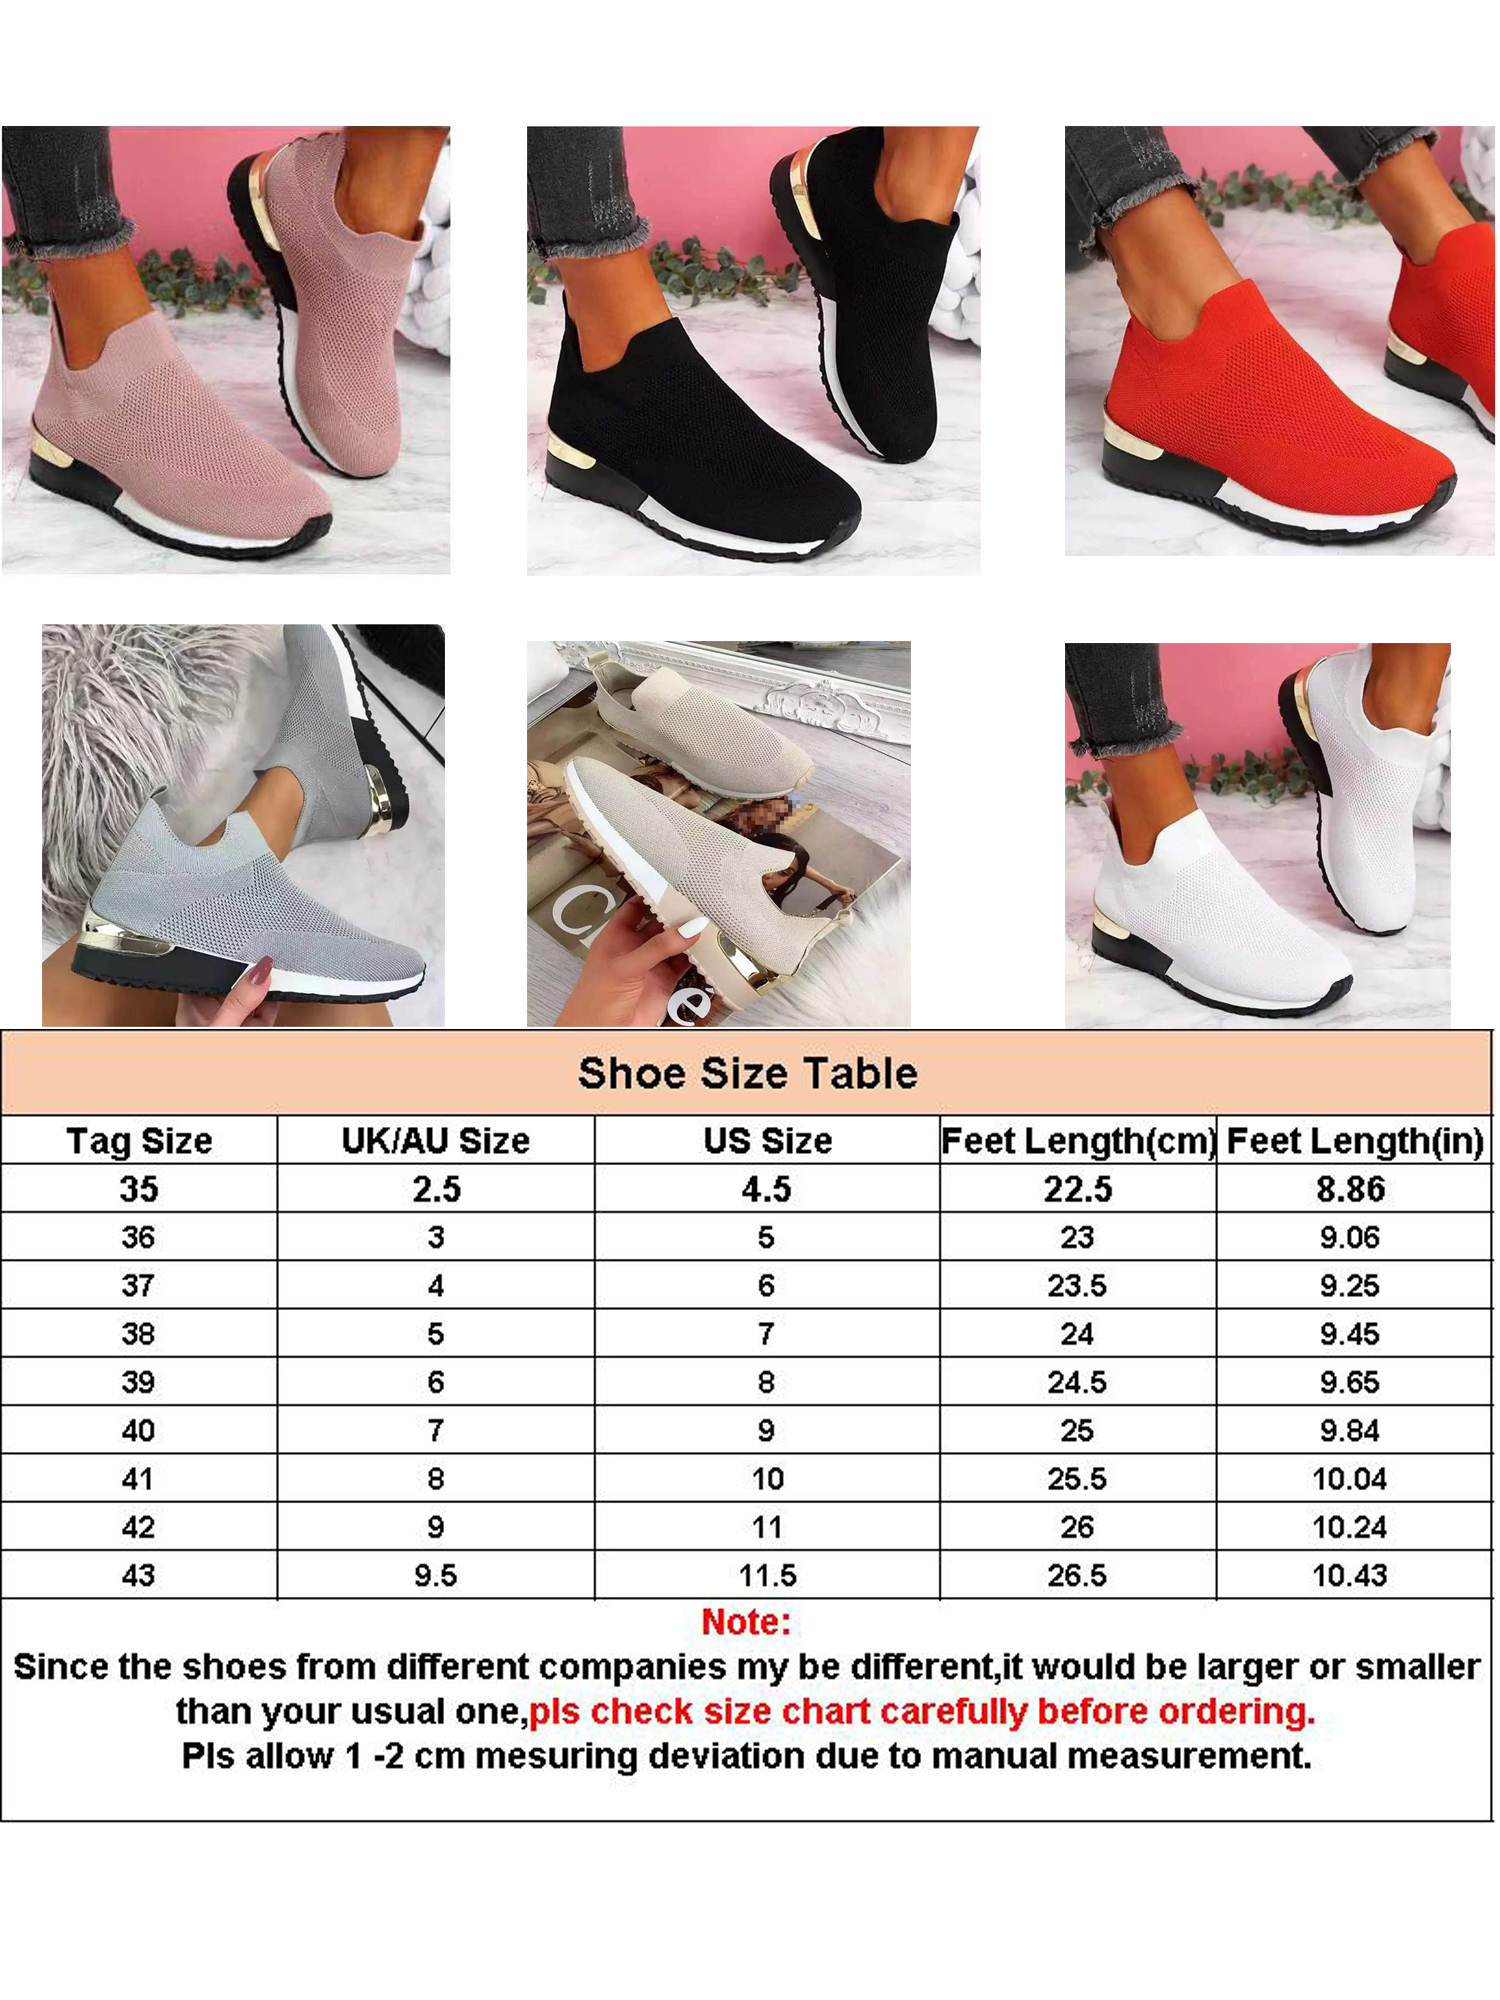 UKAP Women Slip On Sneakers Comfort Walking Running Shoes Casual Gym Trainers - image 2 of 2